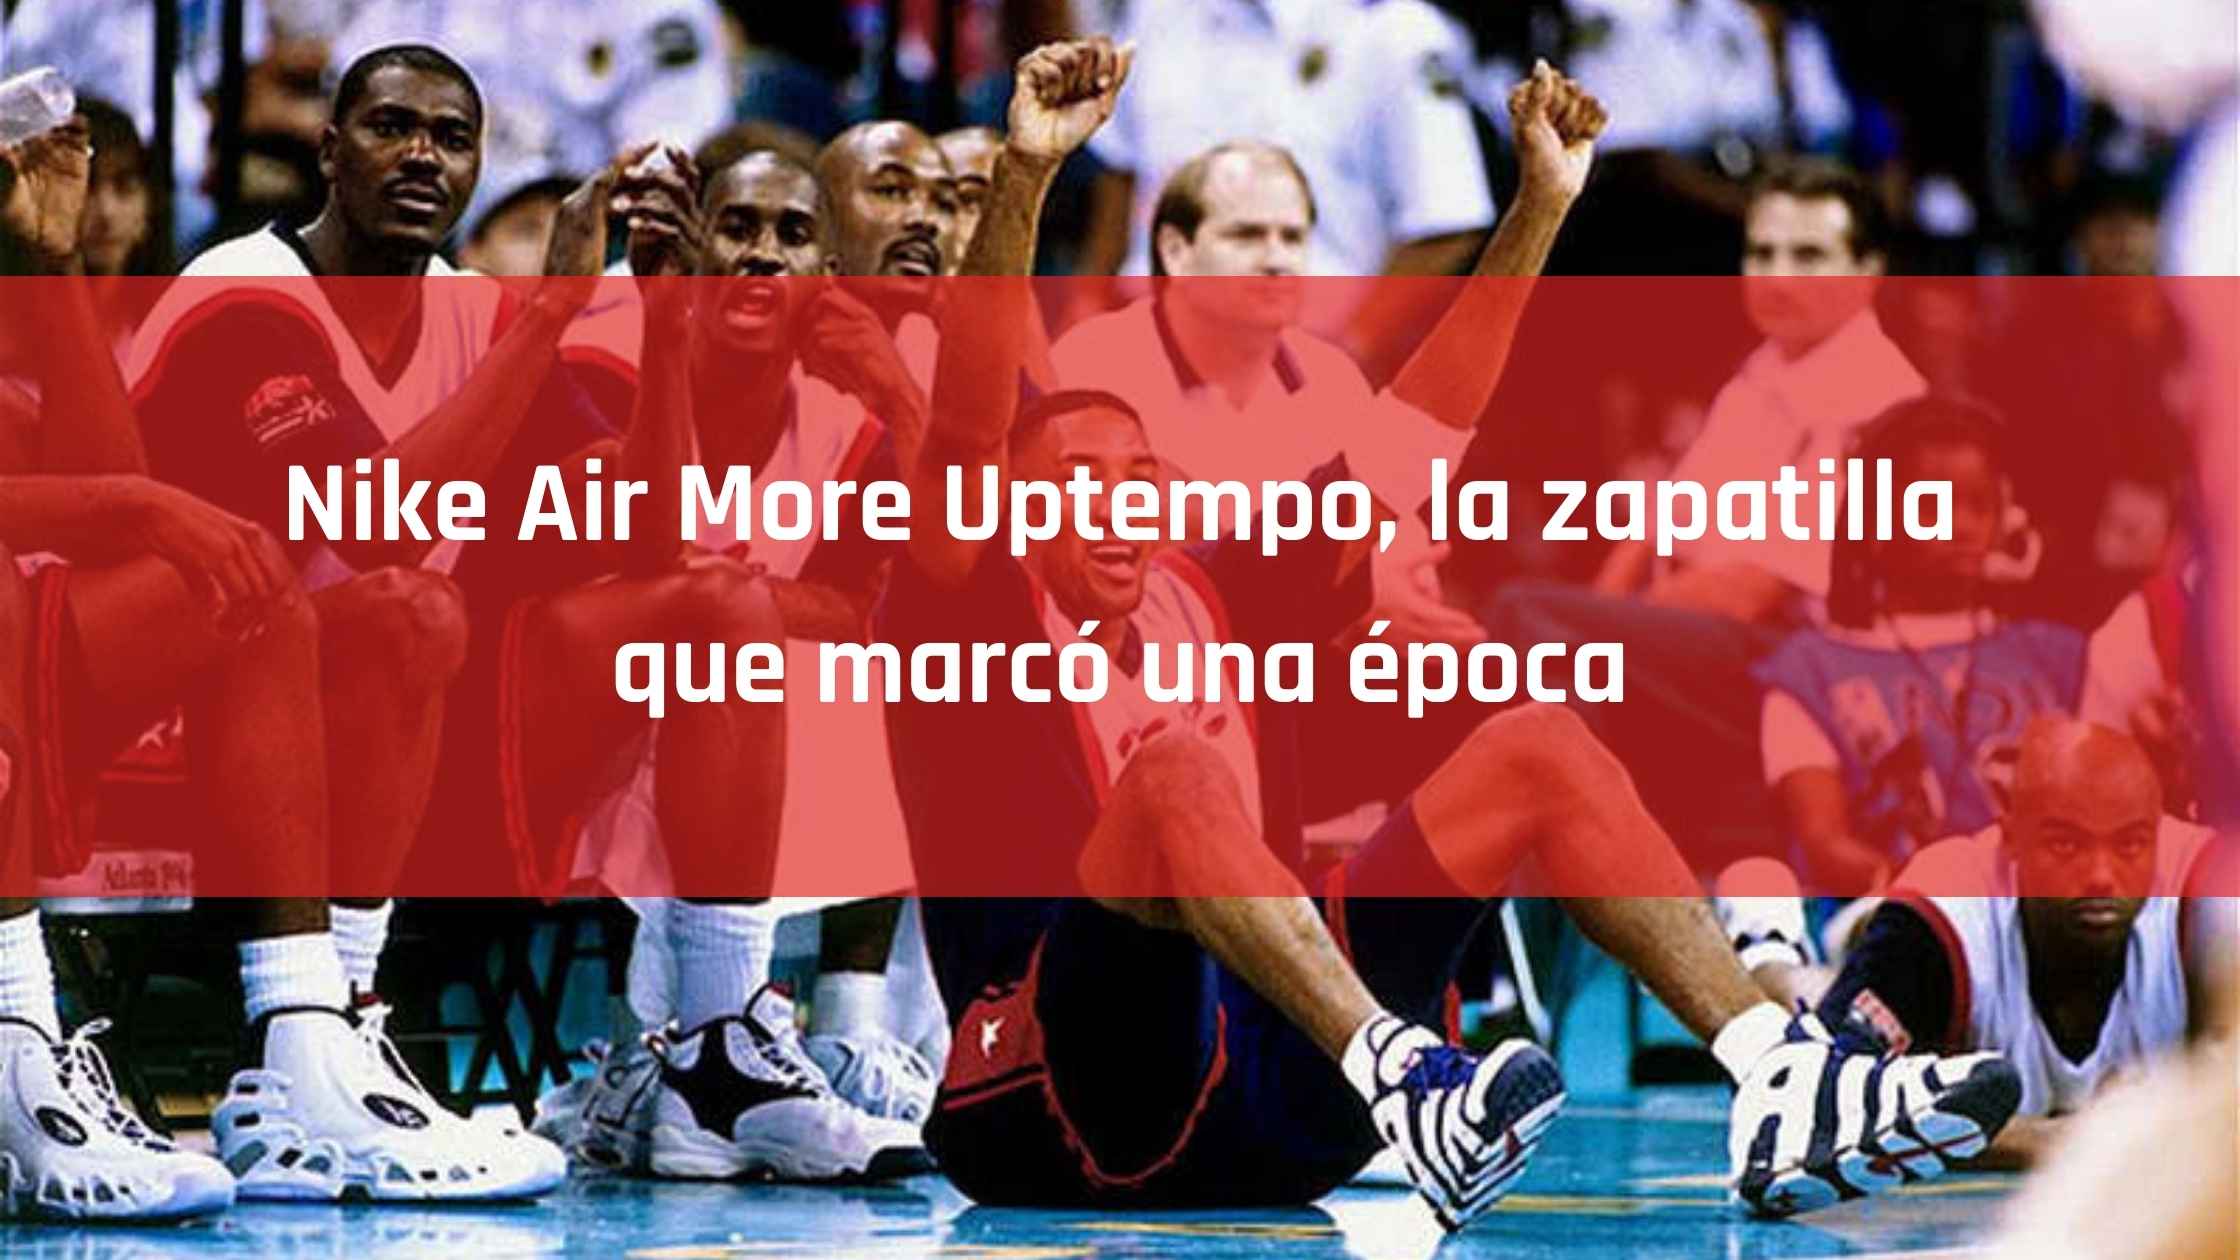 Nike Air Uptempo, la que marcó una época Blog 24